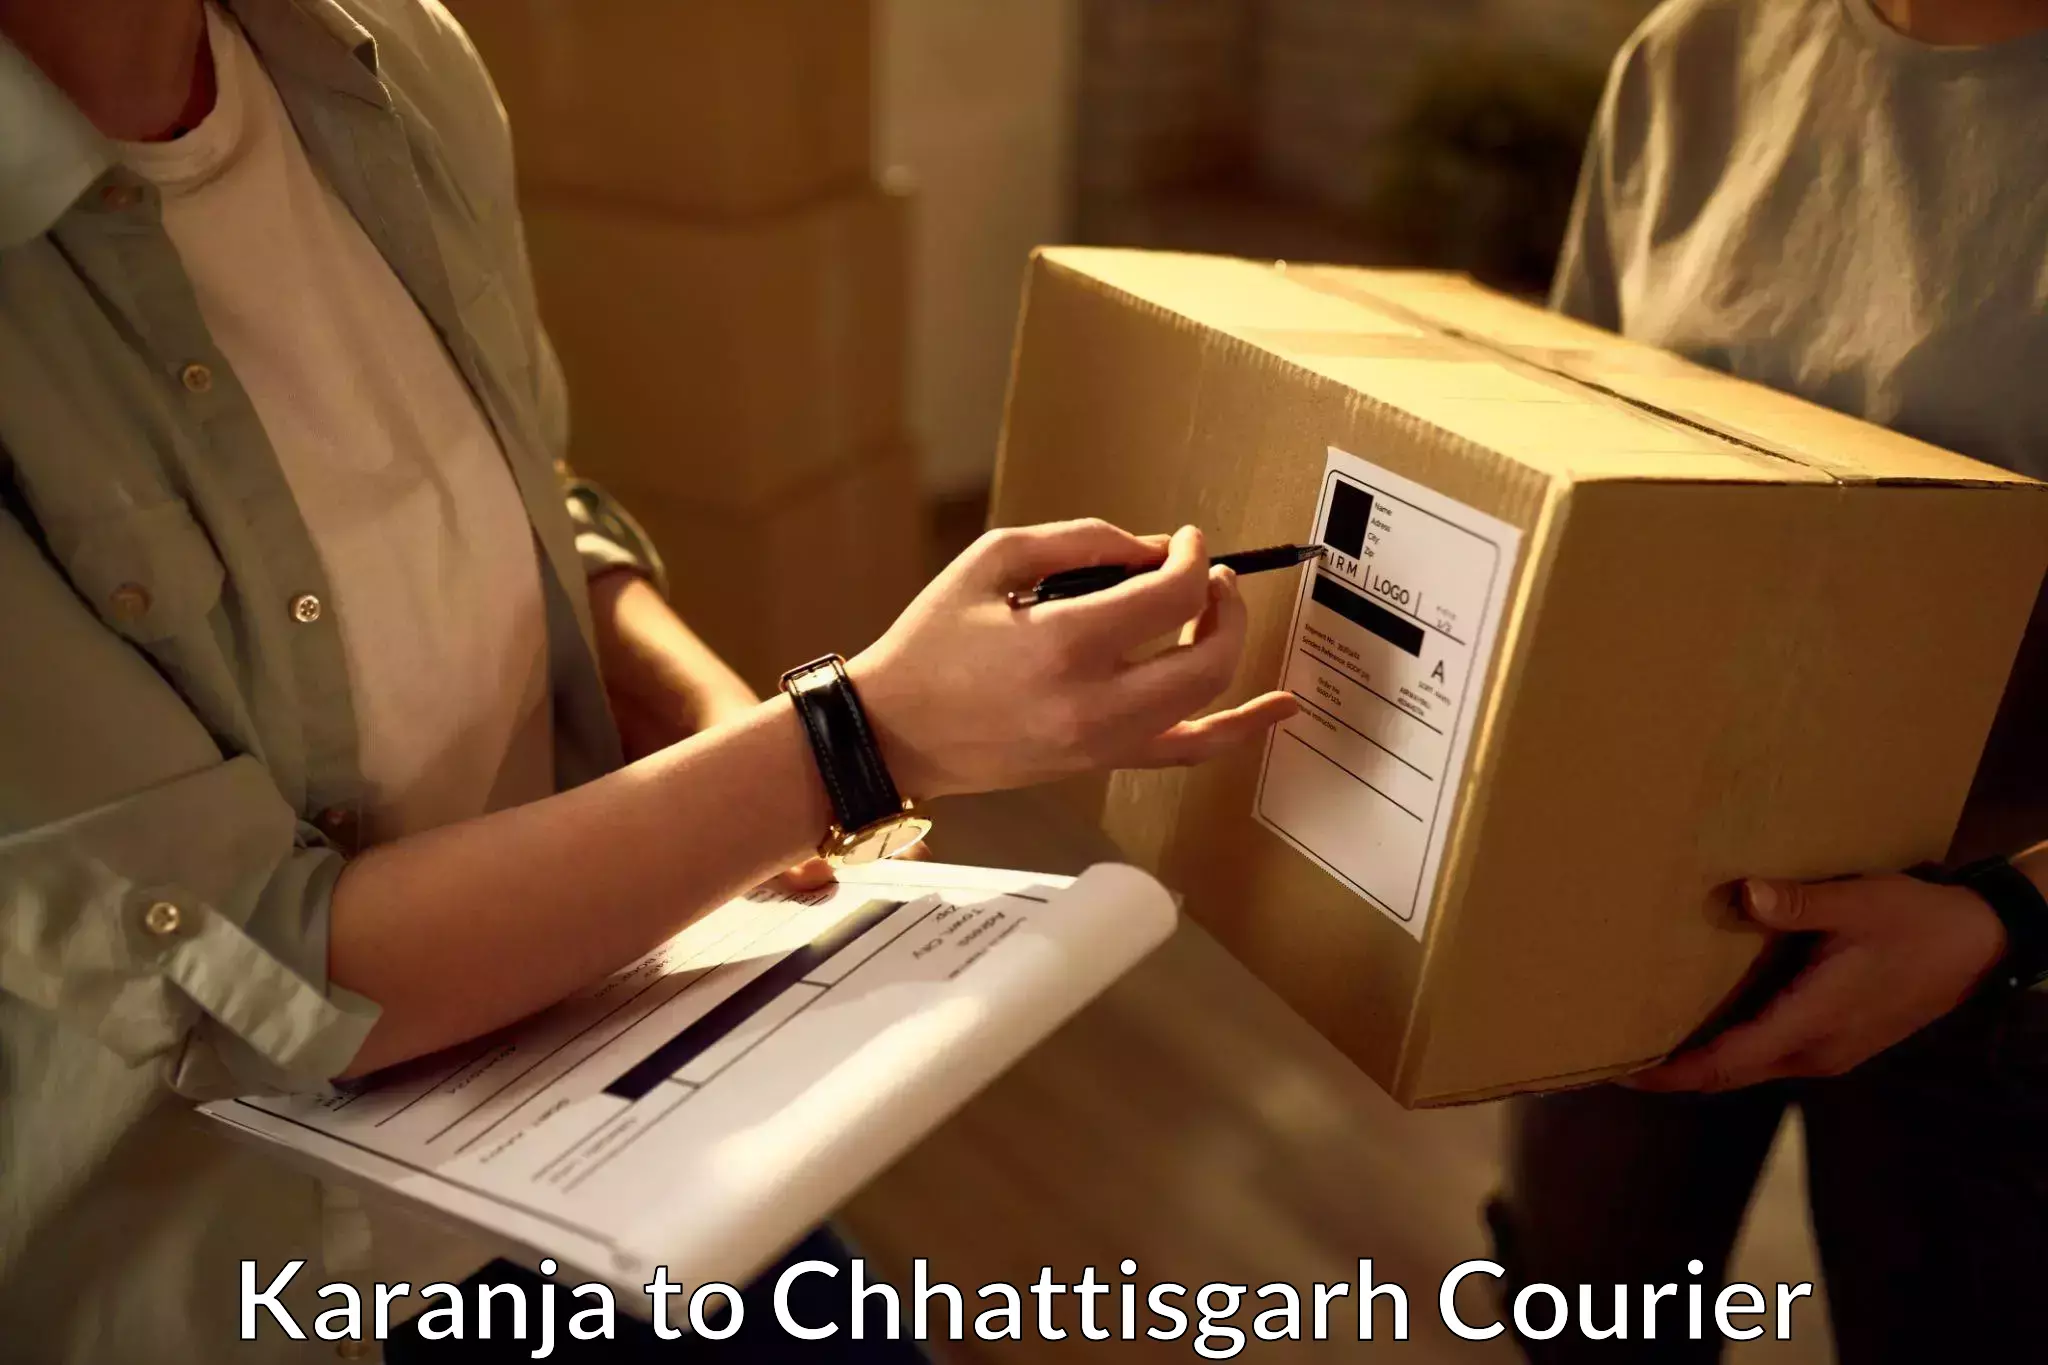 Affordable parcel service Karanja to Korea Chhattisgarh